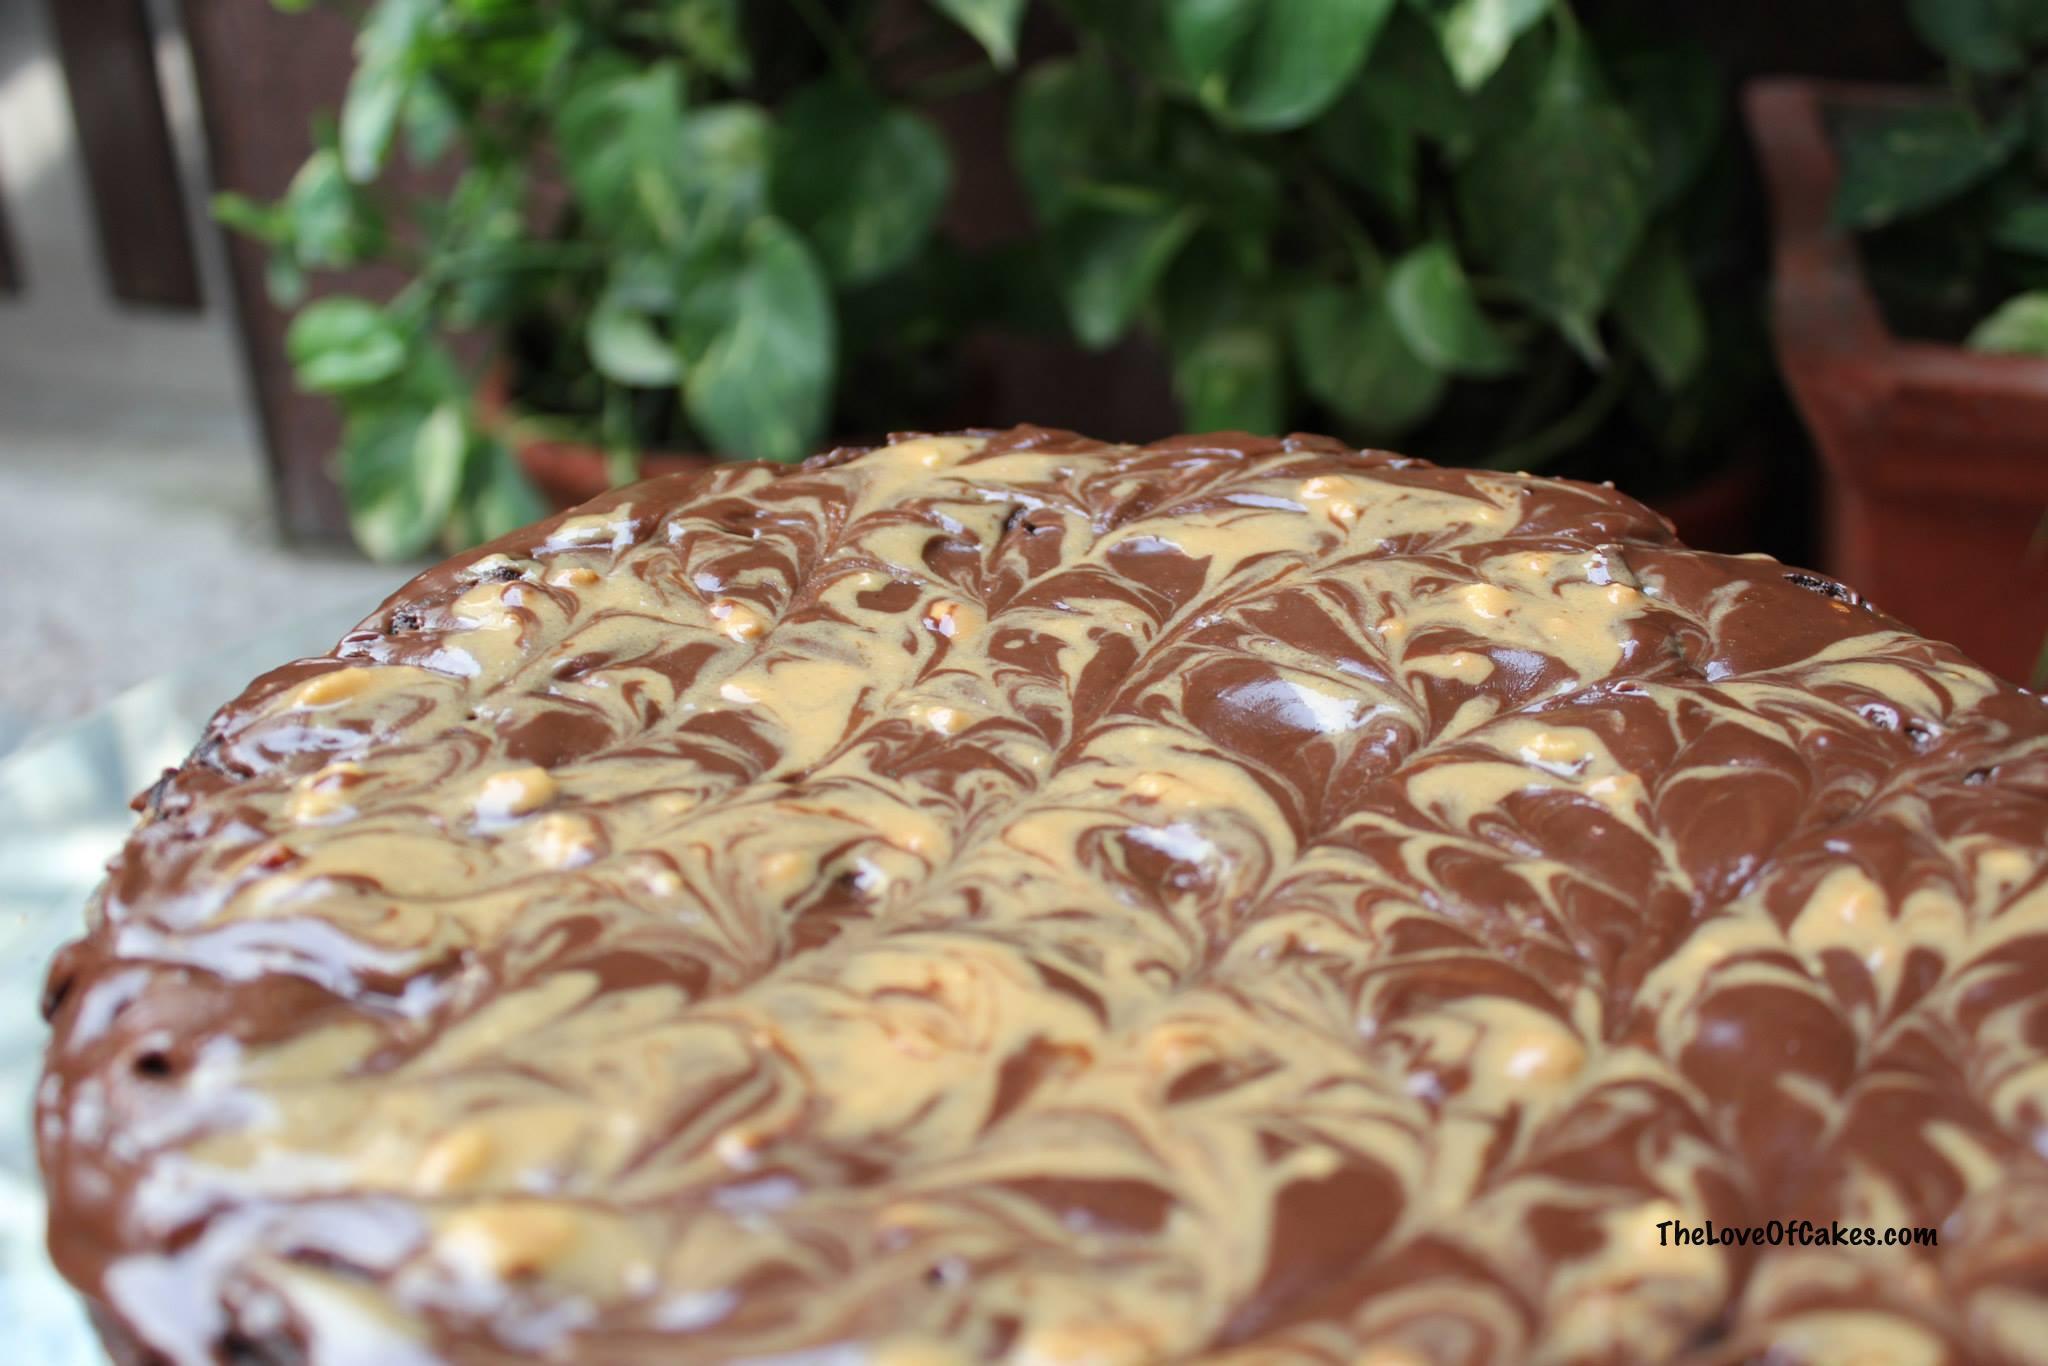 Chocolate and Peanut Butter Swirl Cake